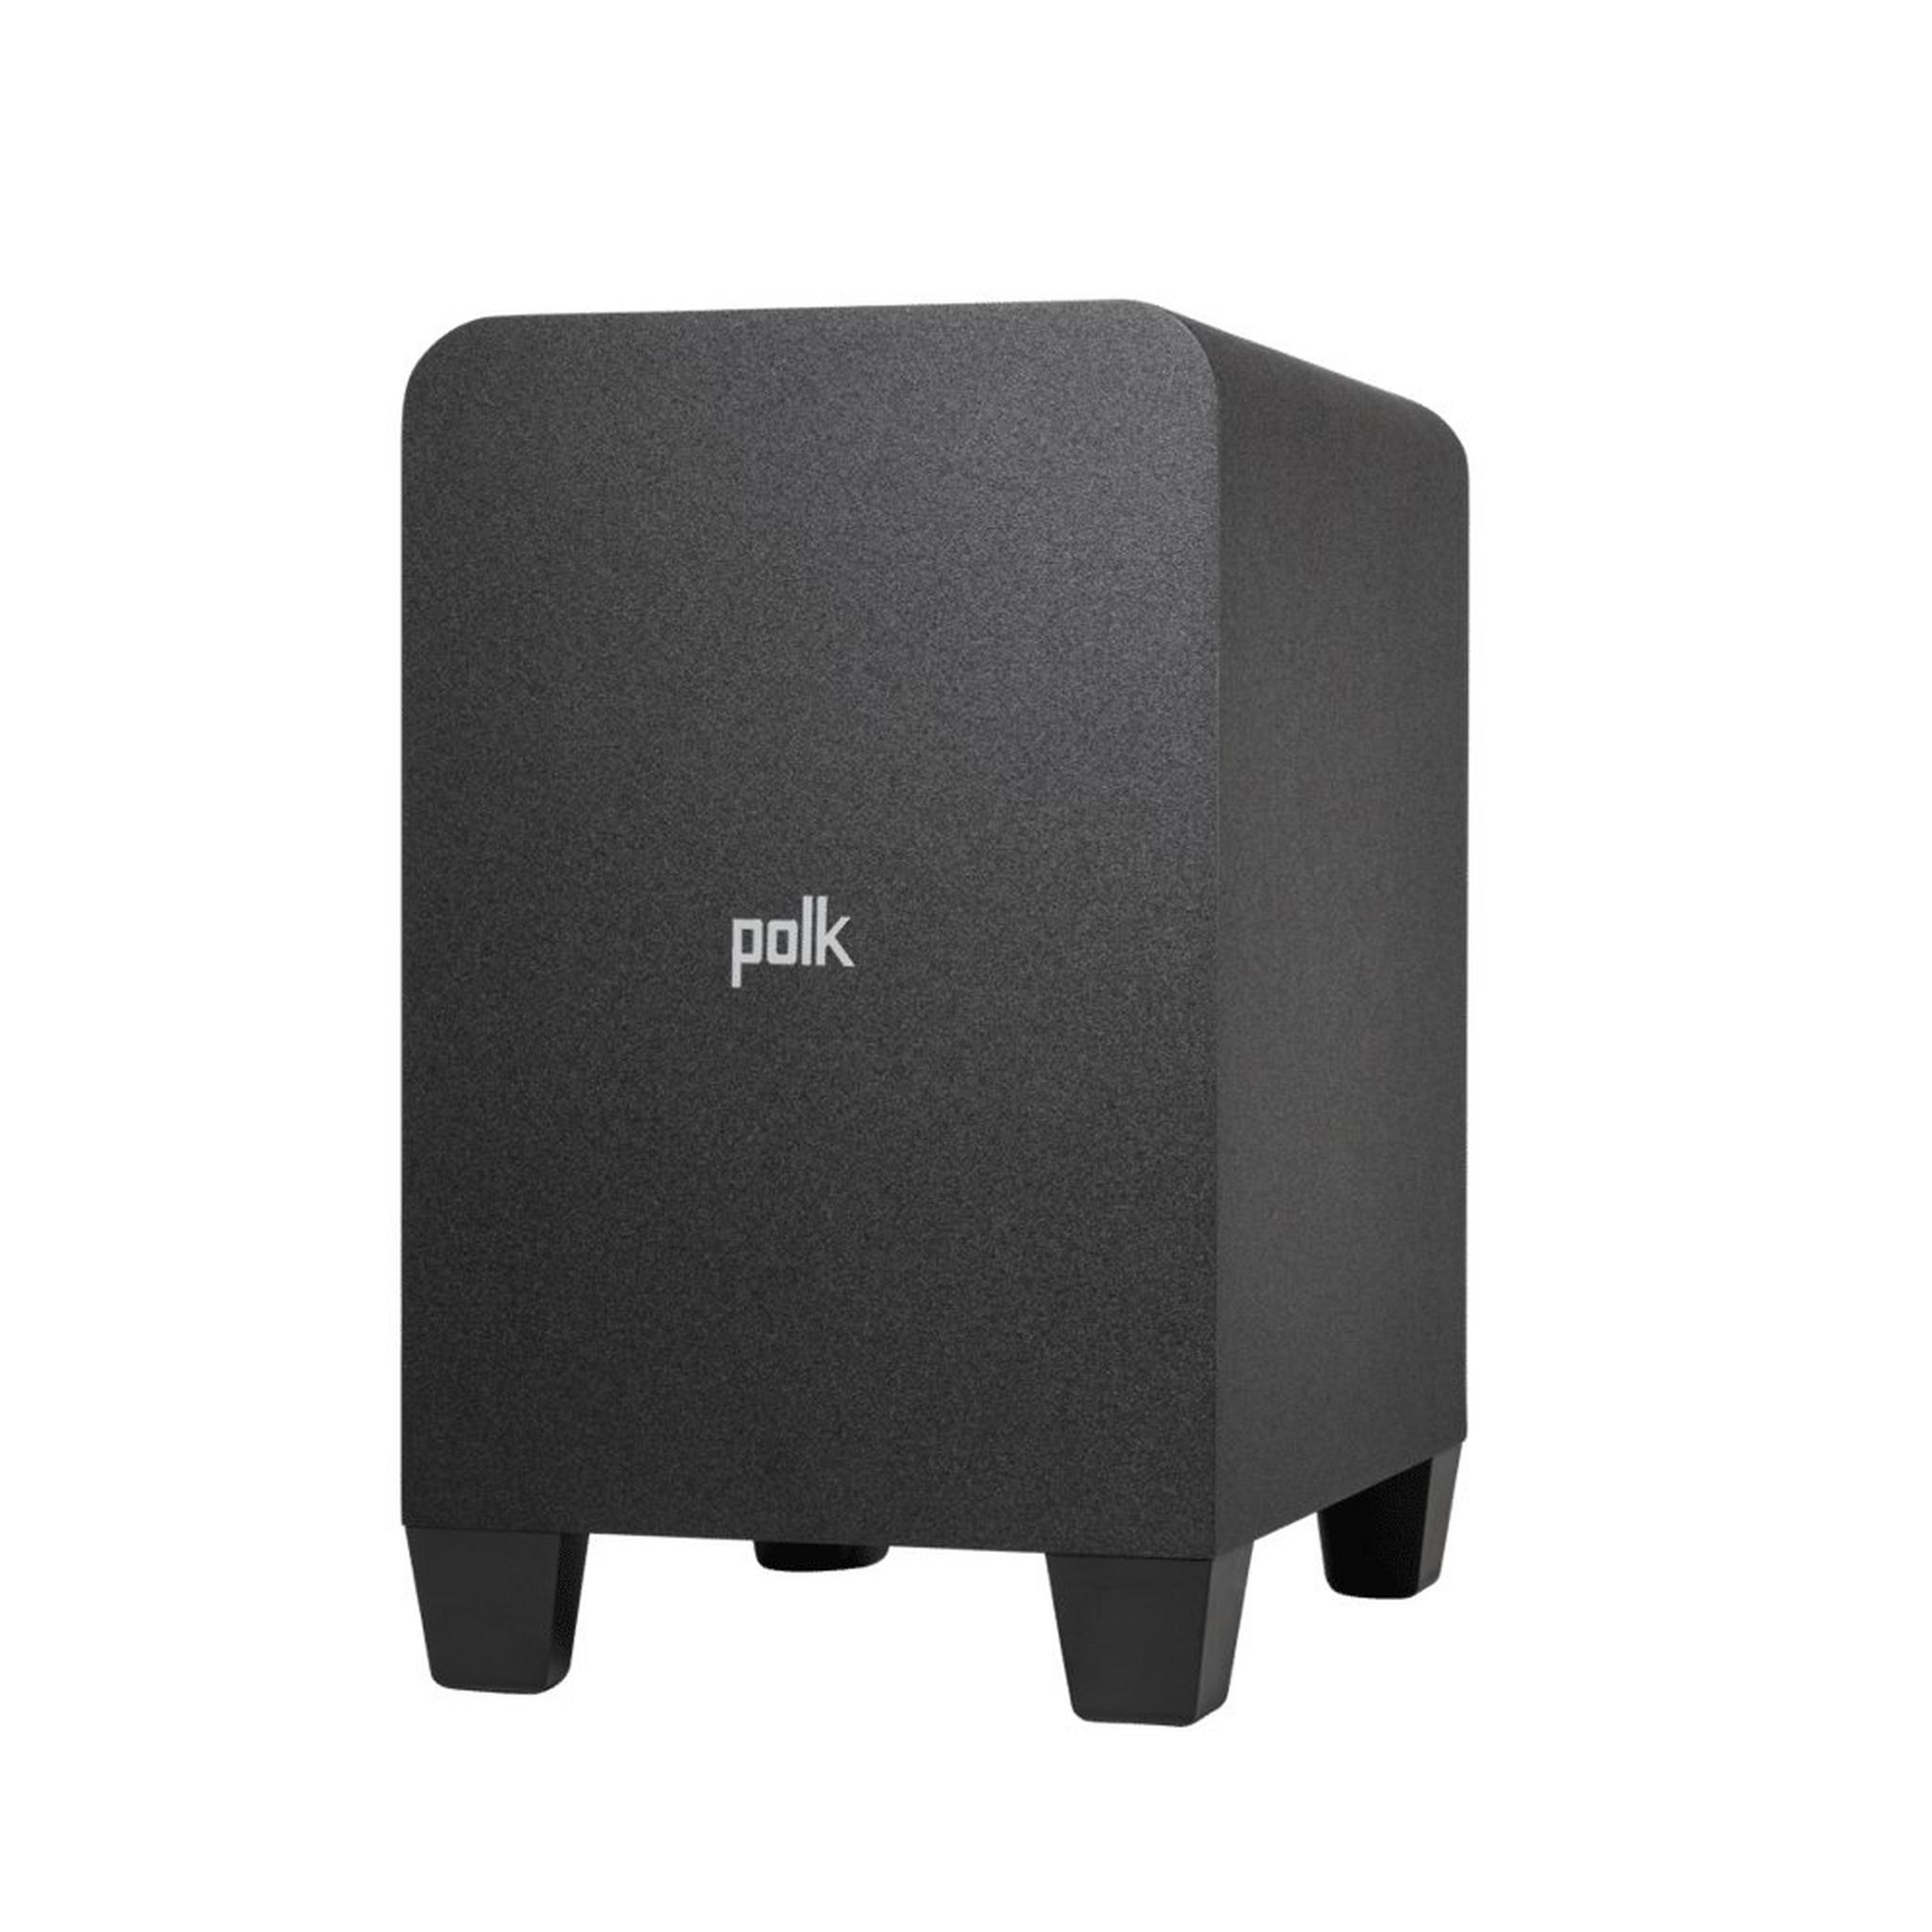 Polk Audio SIGNA S4 Sound Bar & Wireless Subwoofer, 3.1.2 Channel, 100W - Black